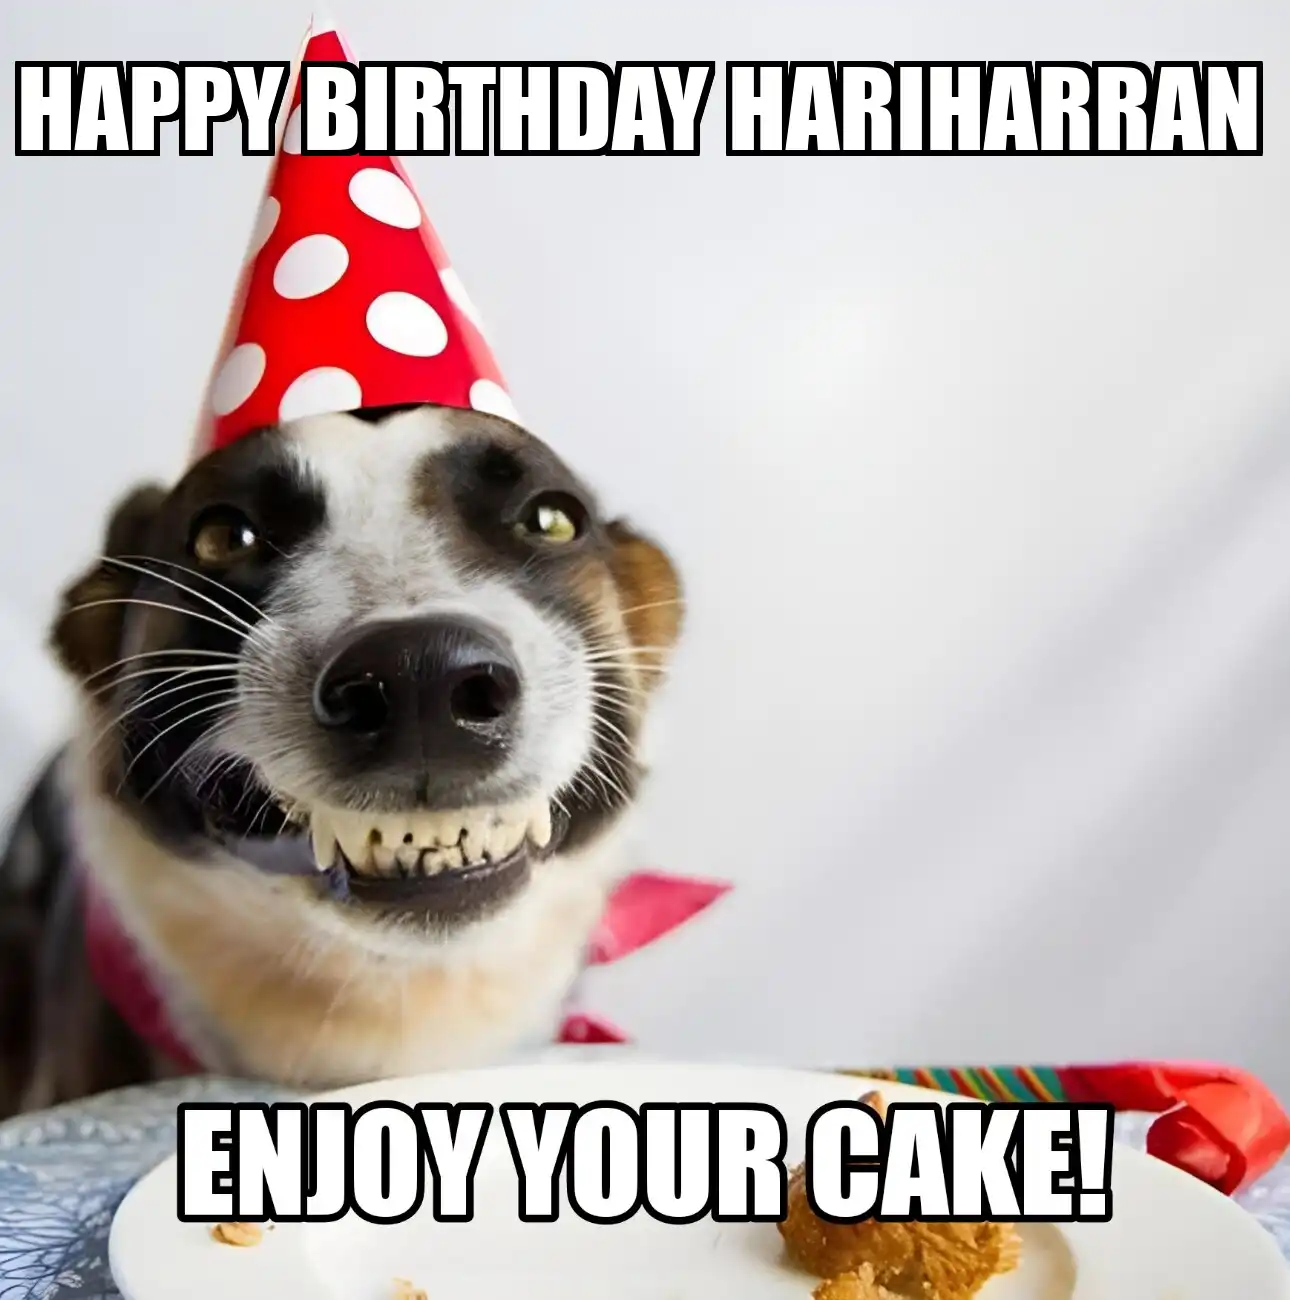 Happy Birthday Hariharran Enjoy Your Cake Dog Meme